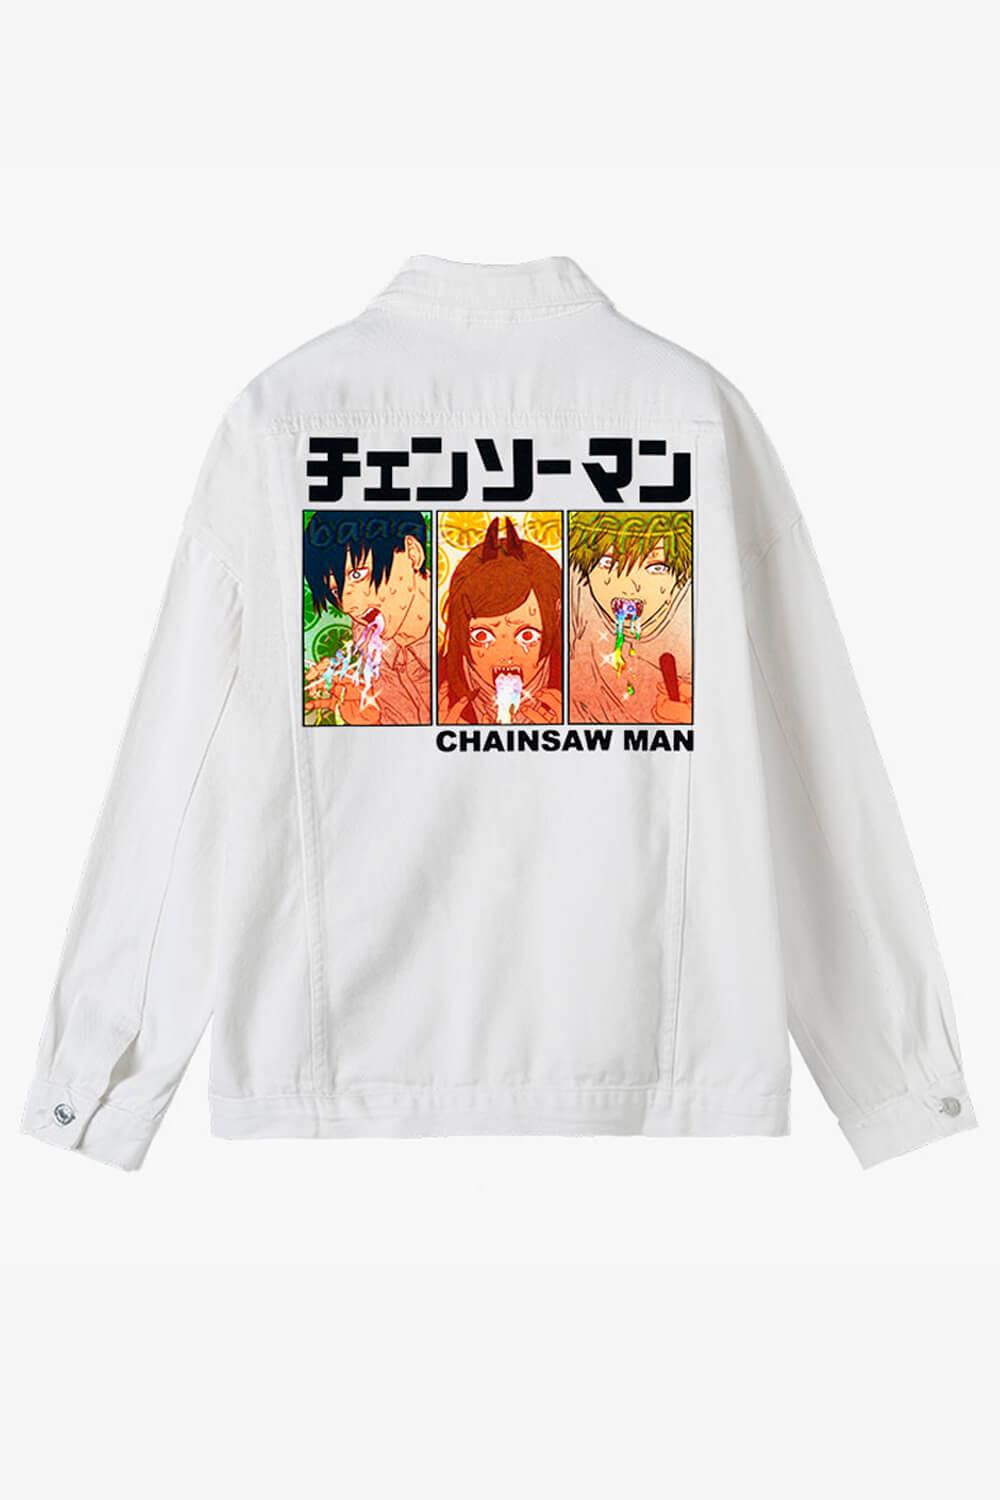 Chainsaw Man Trio Barf Denim Jacket - Aesthetic Clothes Shop